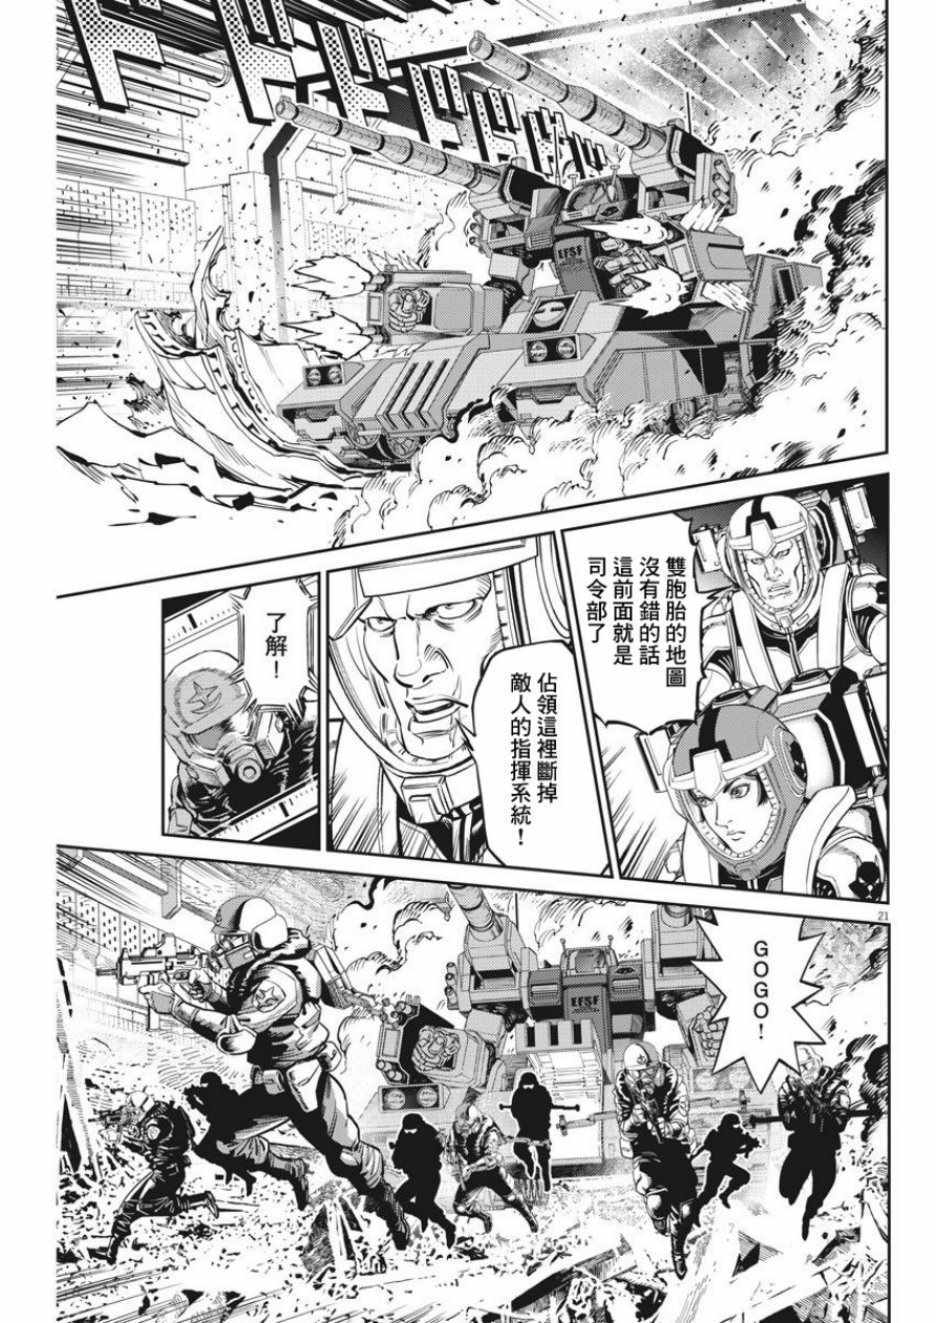 《机动战士高达THUNDERBOLT》漫画 THUNDERBOLT 107集